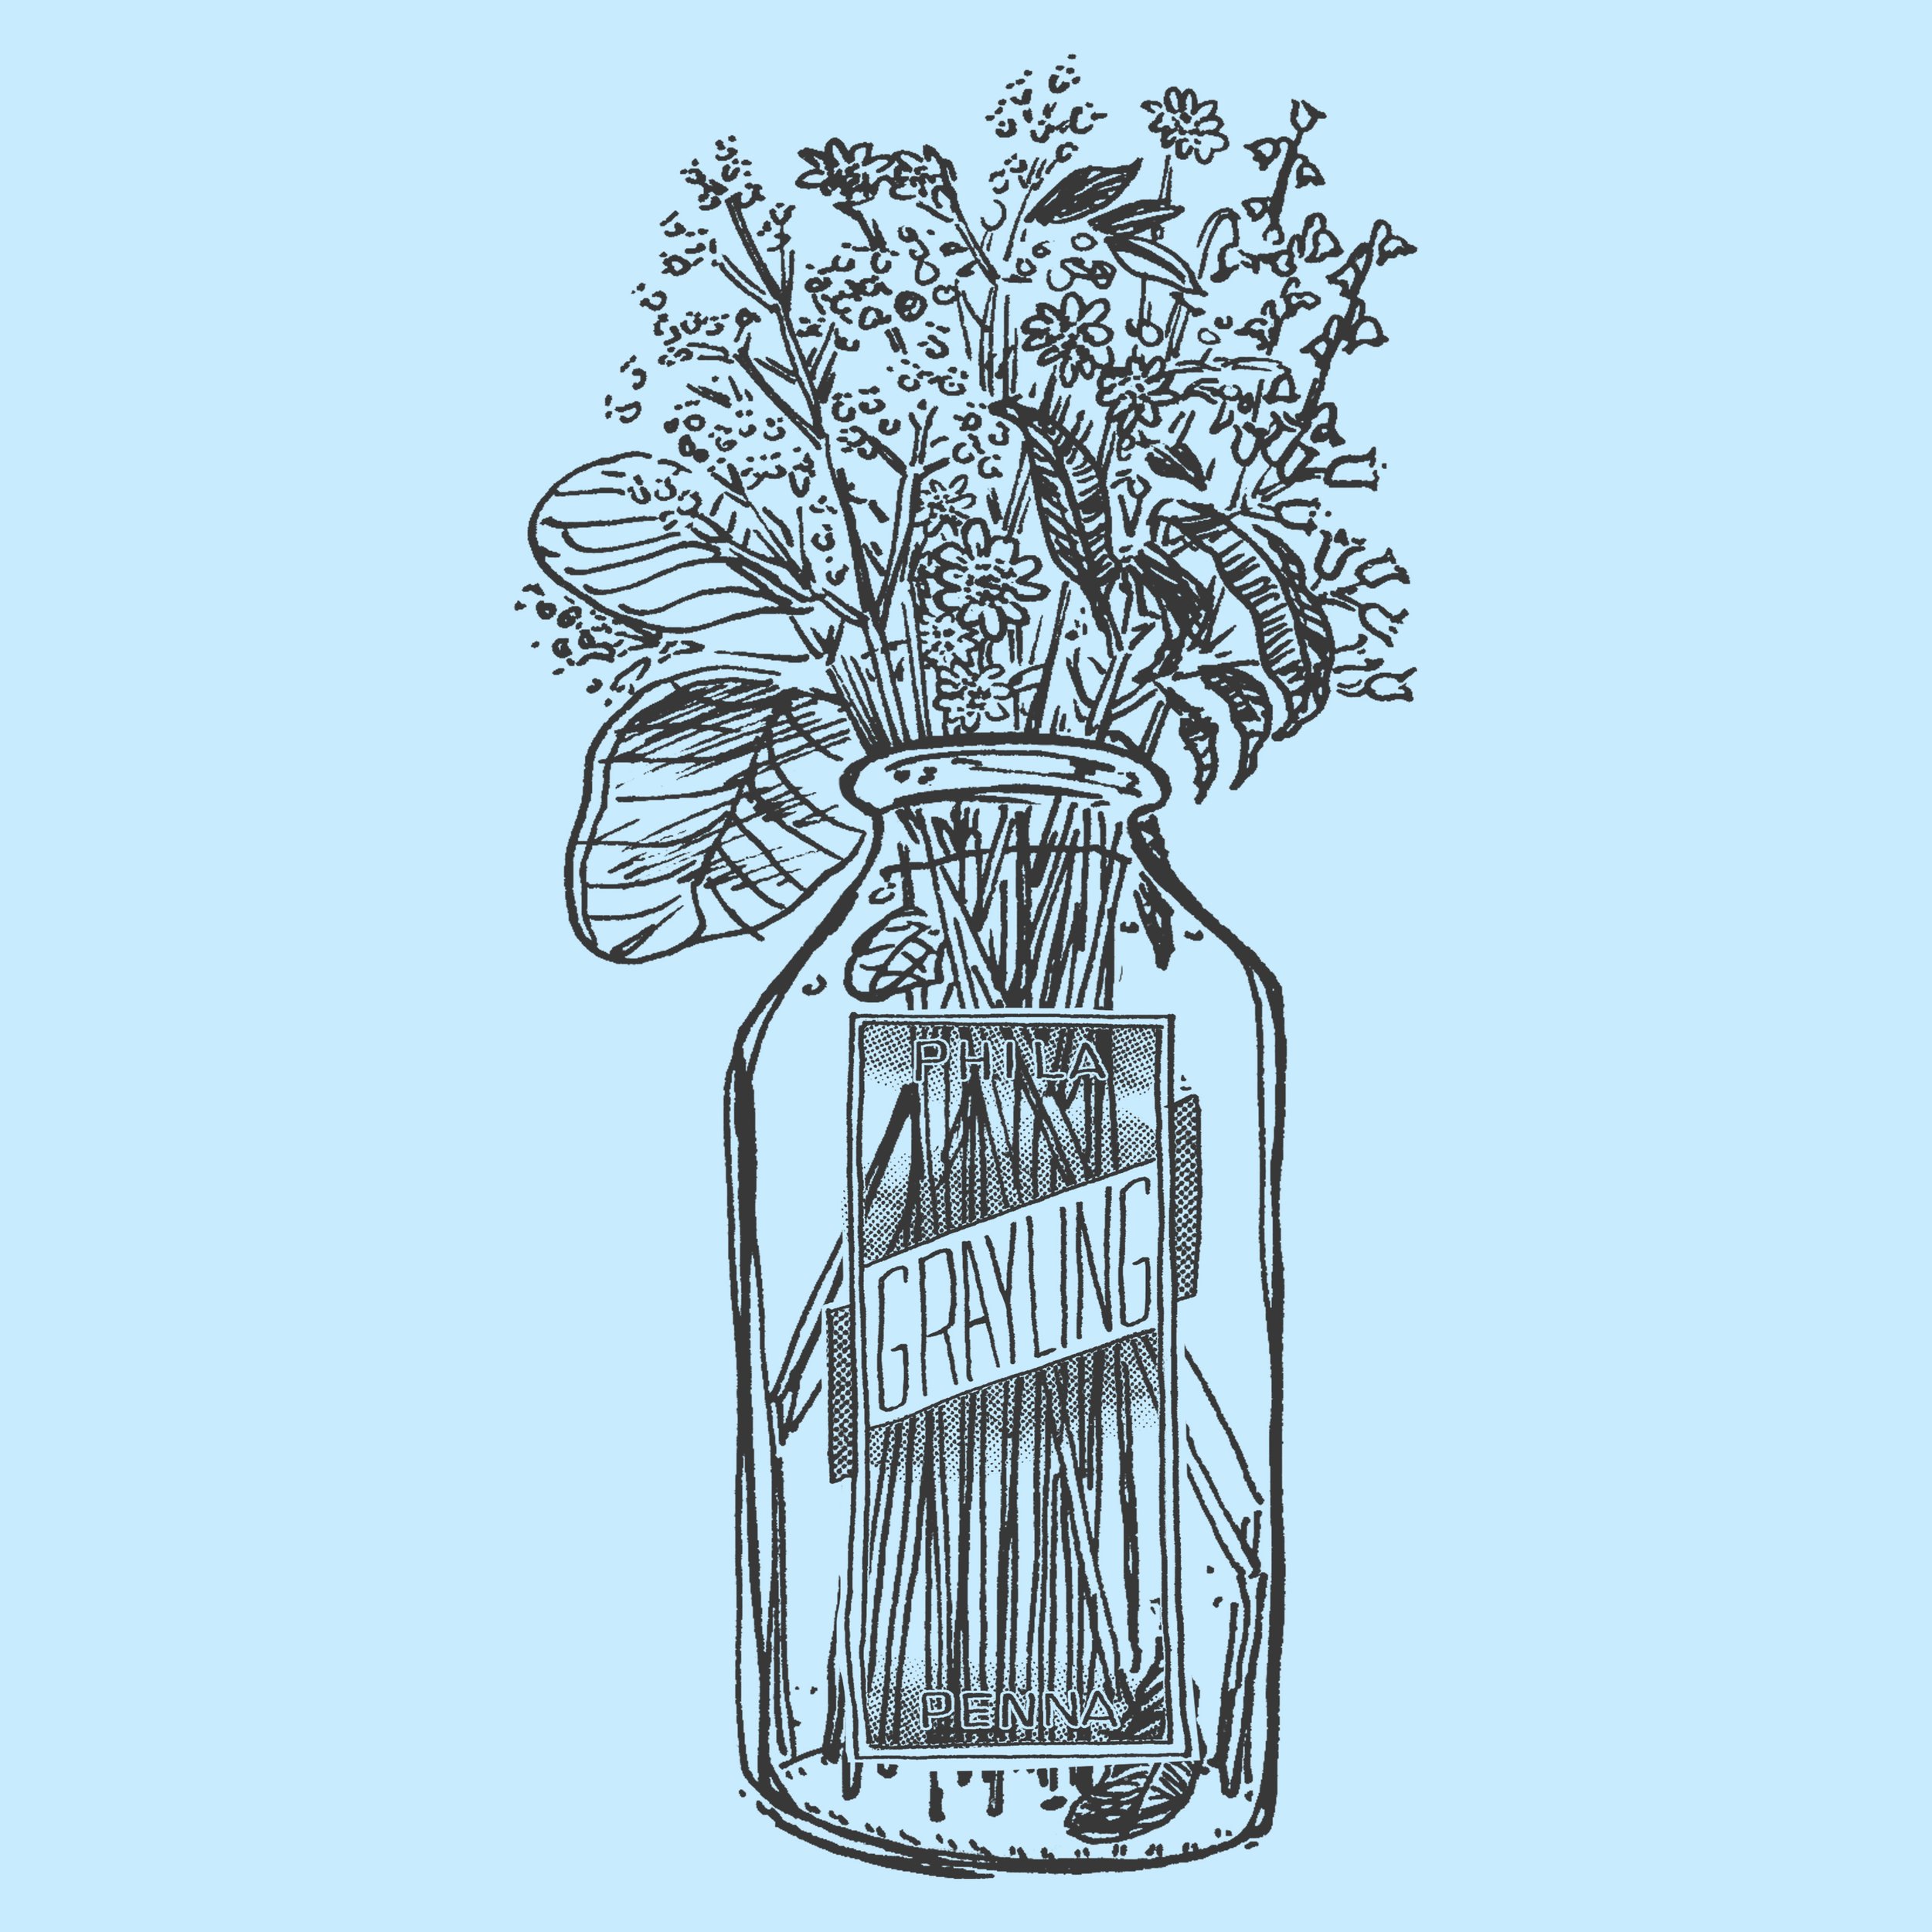 Grayling Flower Shirt.jpg